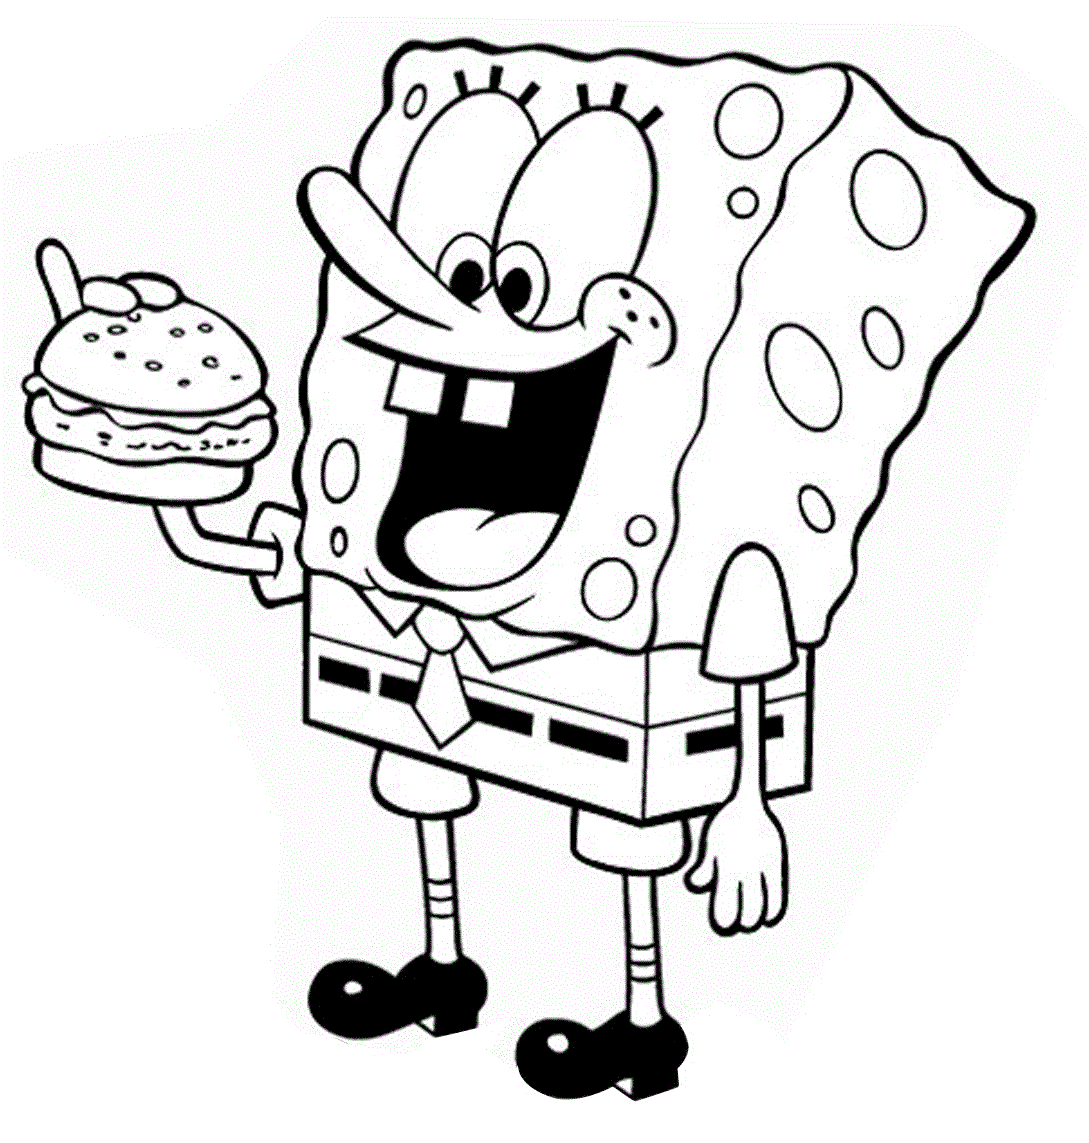 Spongebob Loves Burger Coloring Page